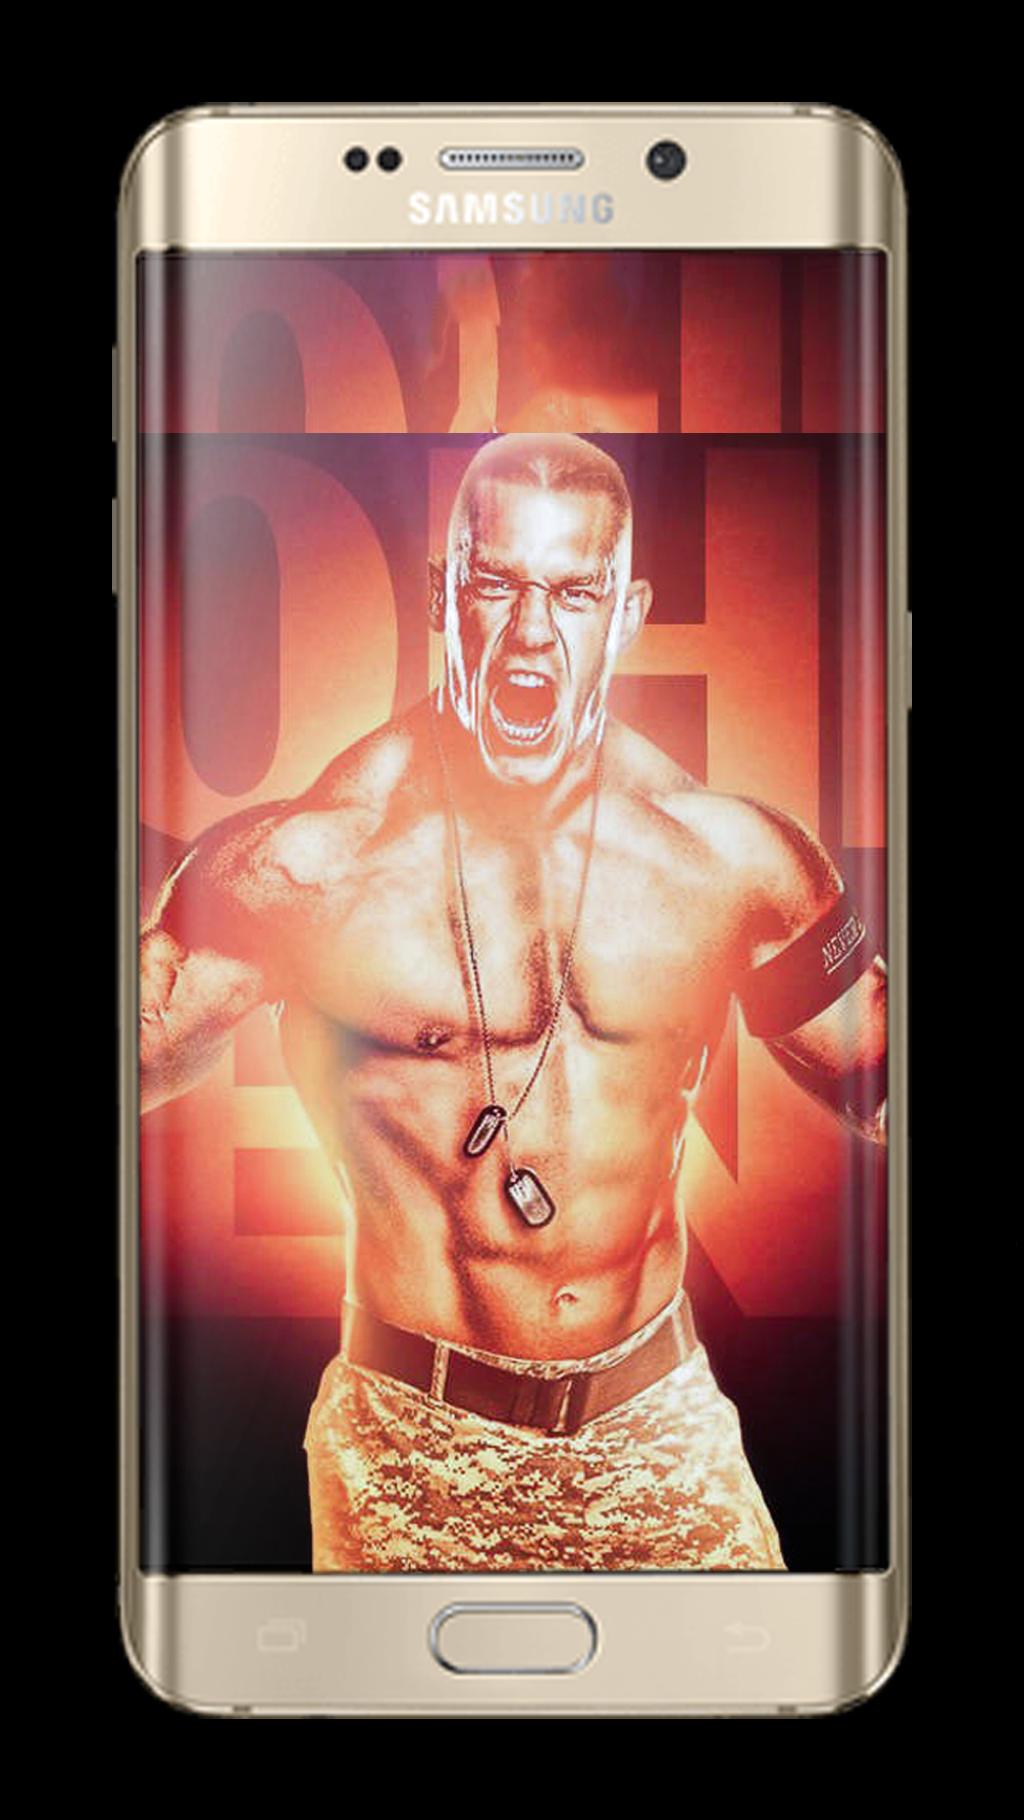 John Cena Wallpapers New Hd For Android Apk Download - john cena 2014 logo roblox